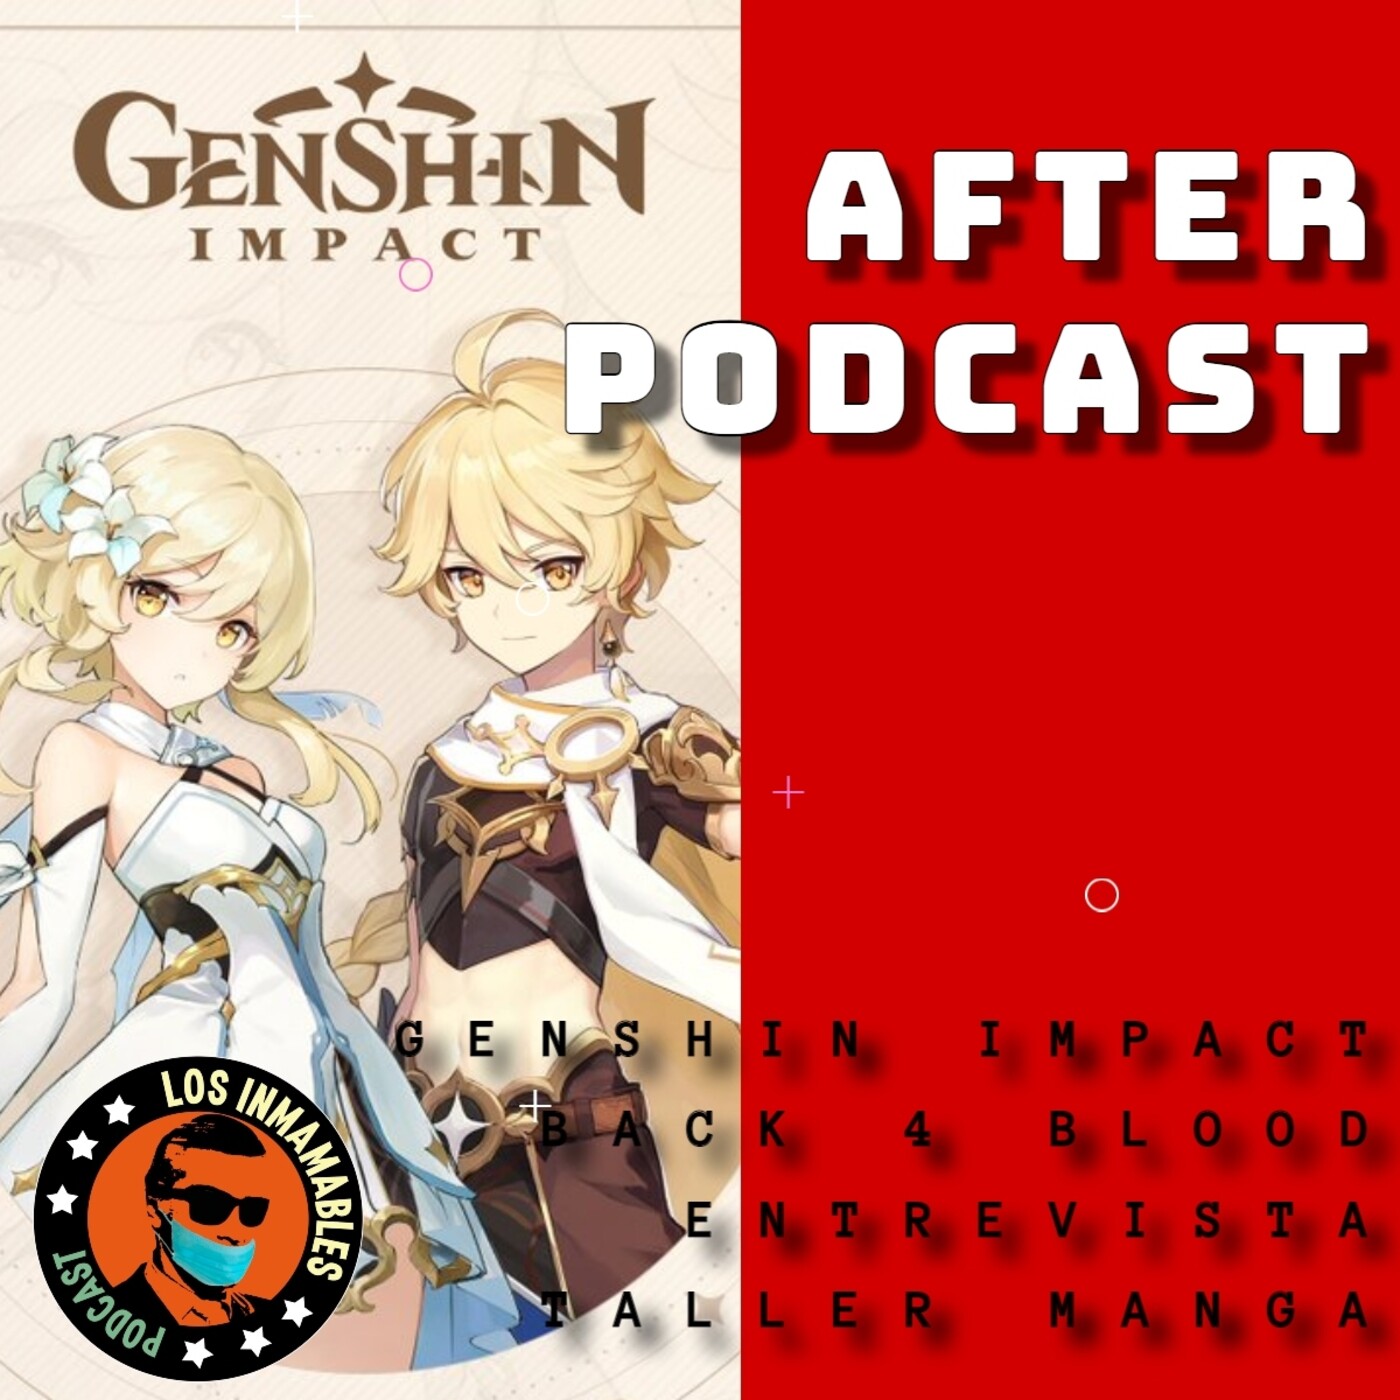 After Podcast: Aniversario Genshin Impact, Taller de Manga y sha!